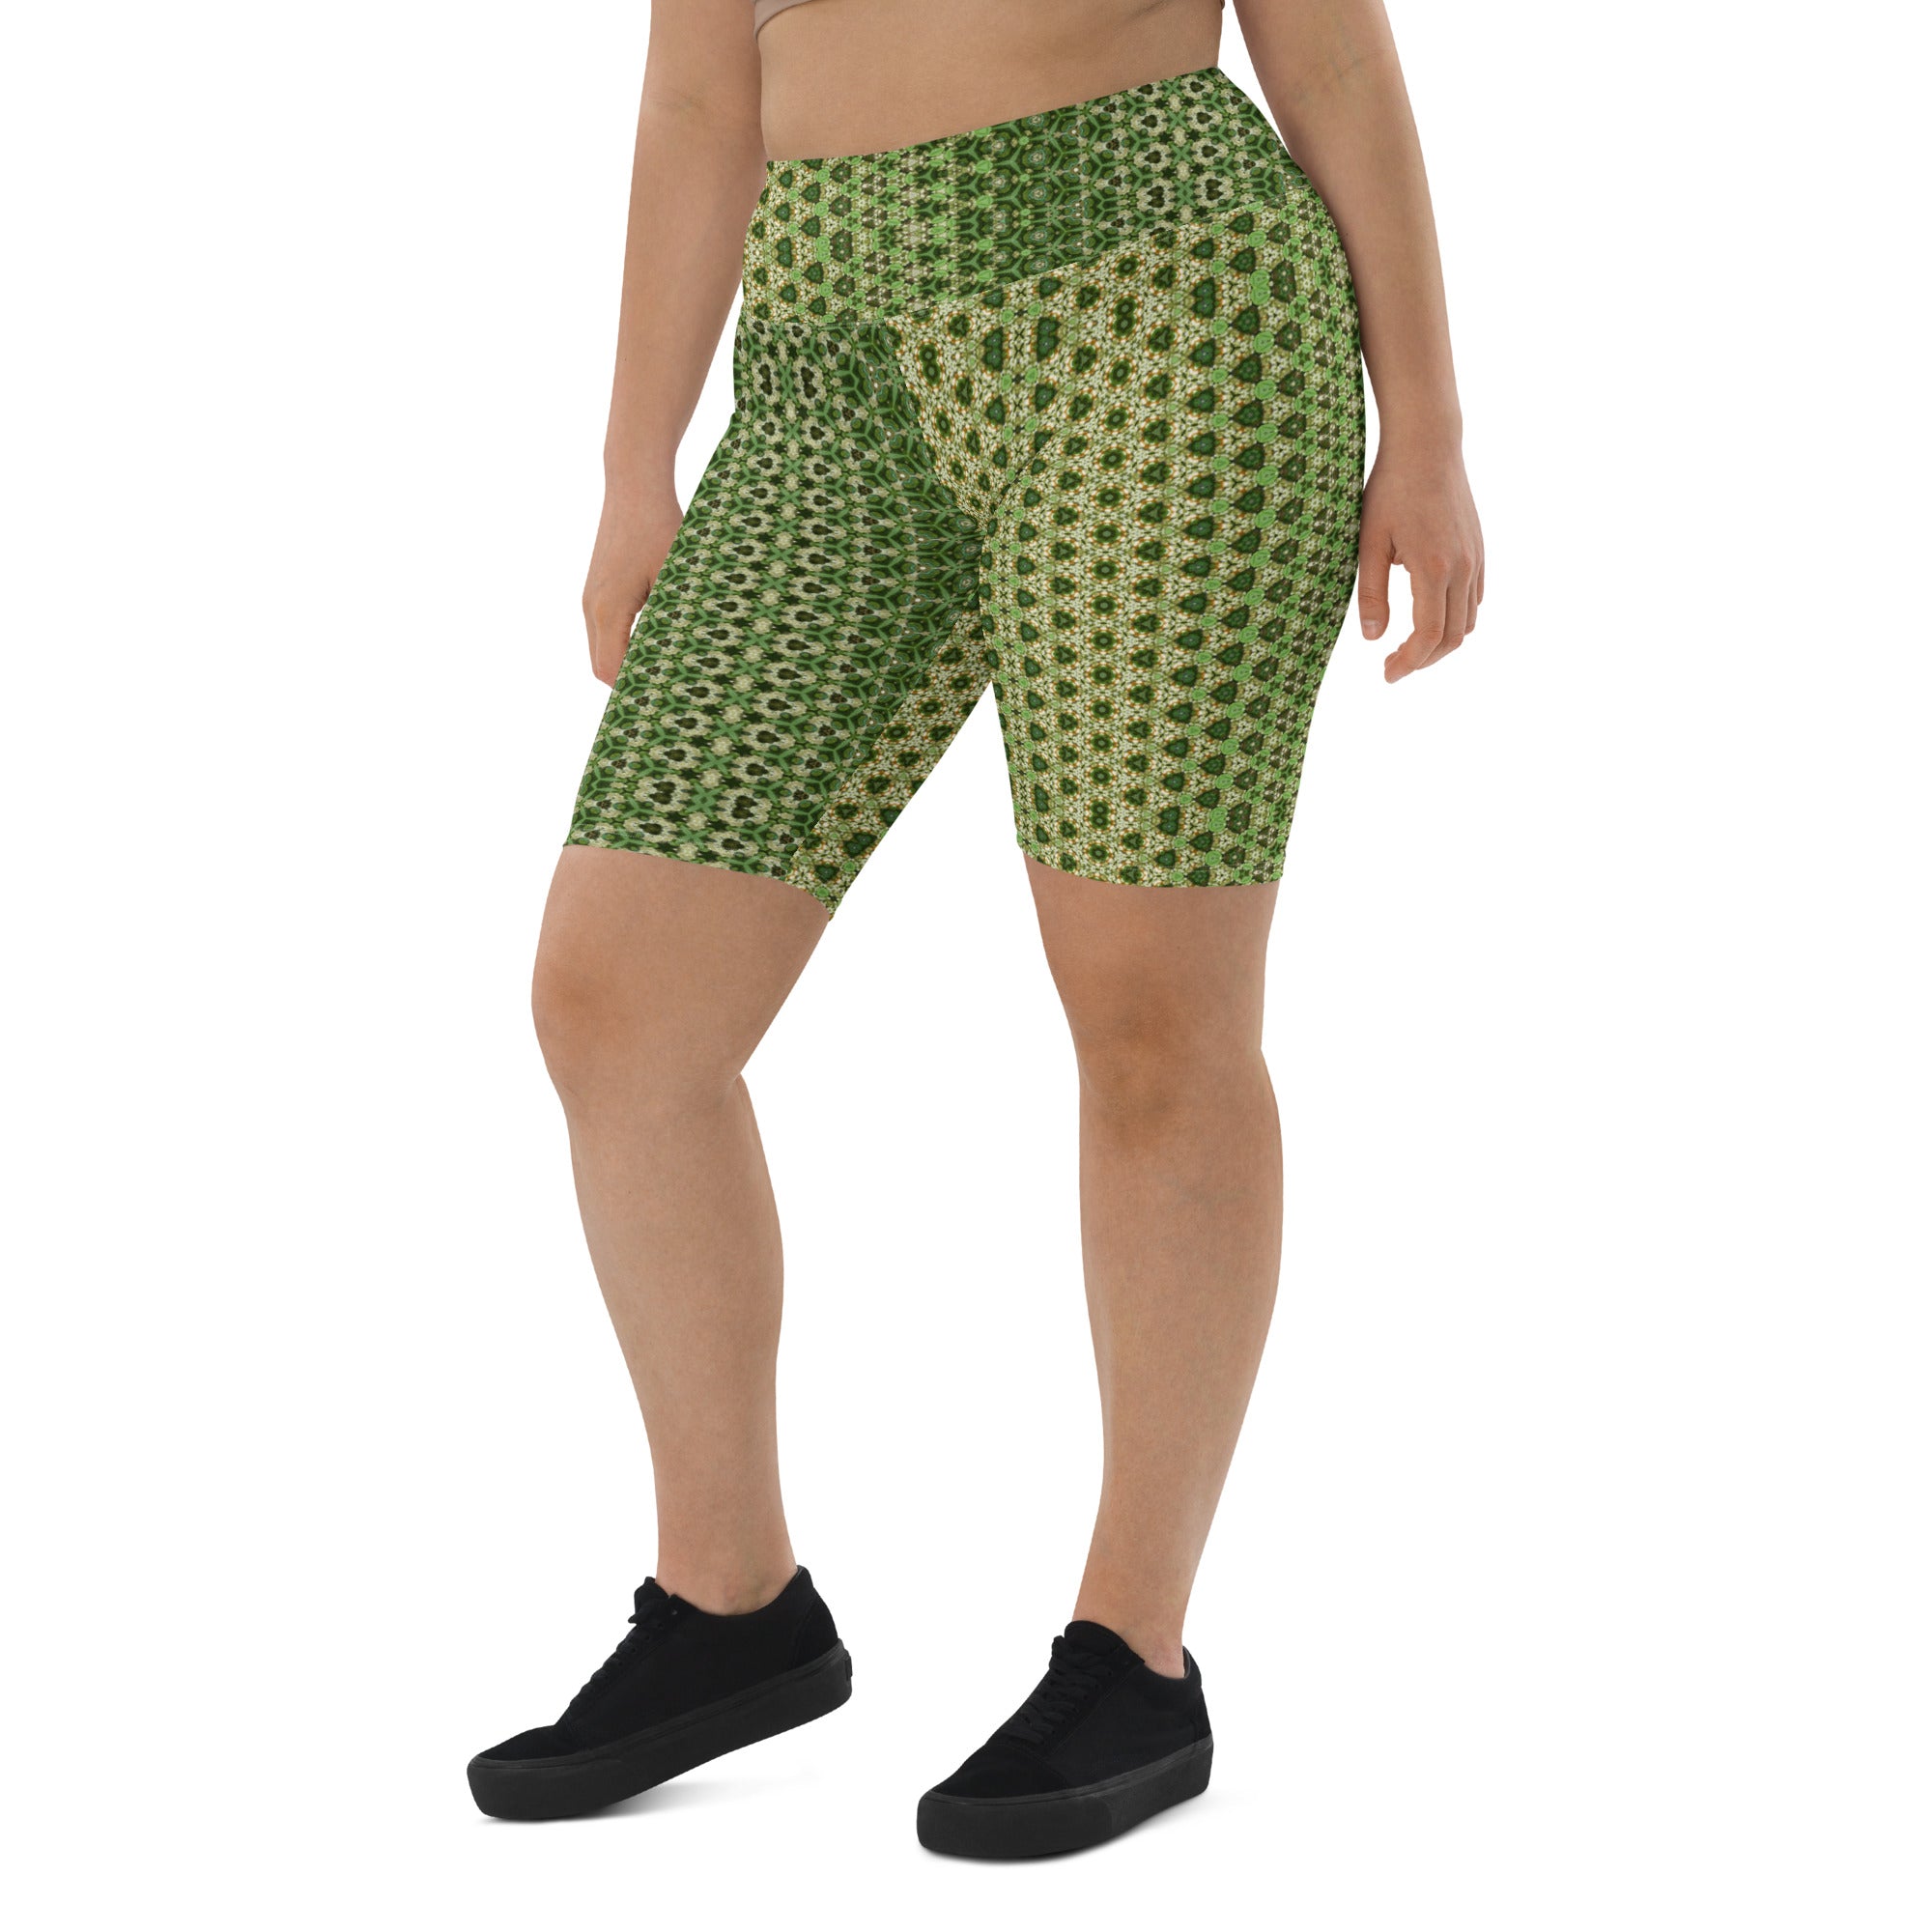 Scarabee Green Biker Shorts with pocket, by Sensus Studio Design